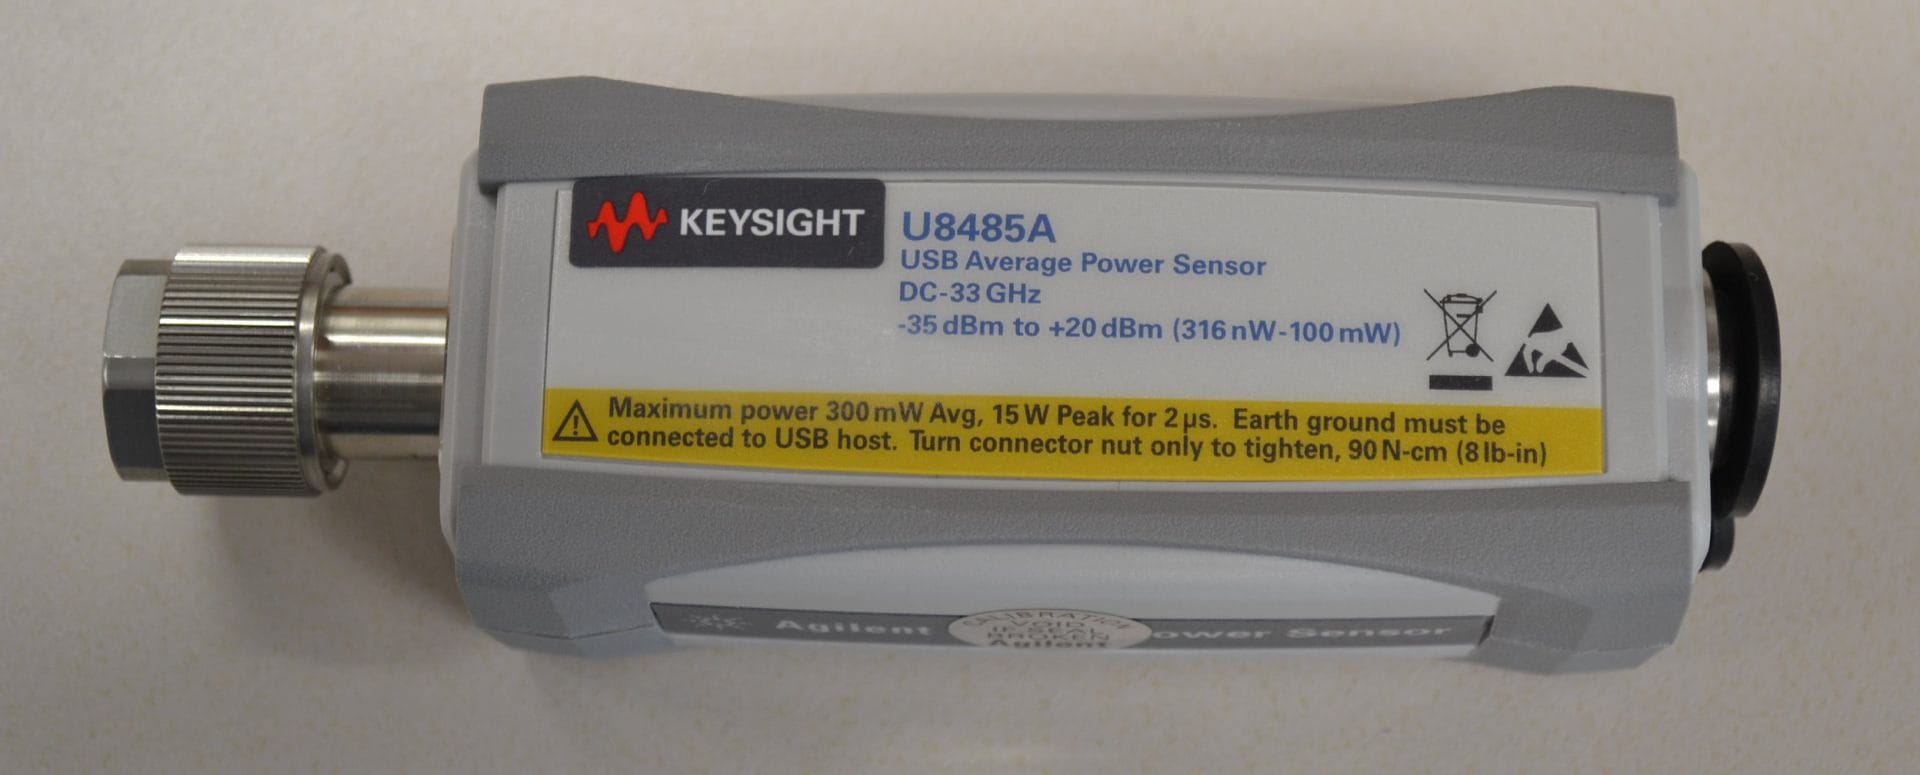 Keysight U8485A Usb Thermocouple Power Sensor